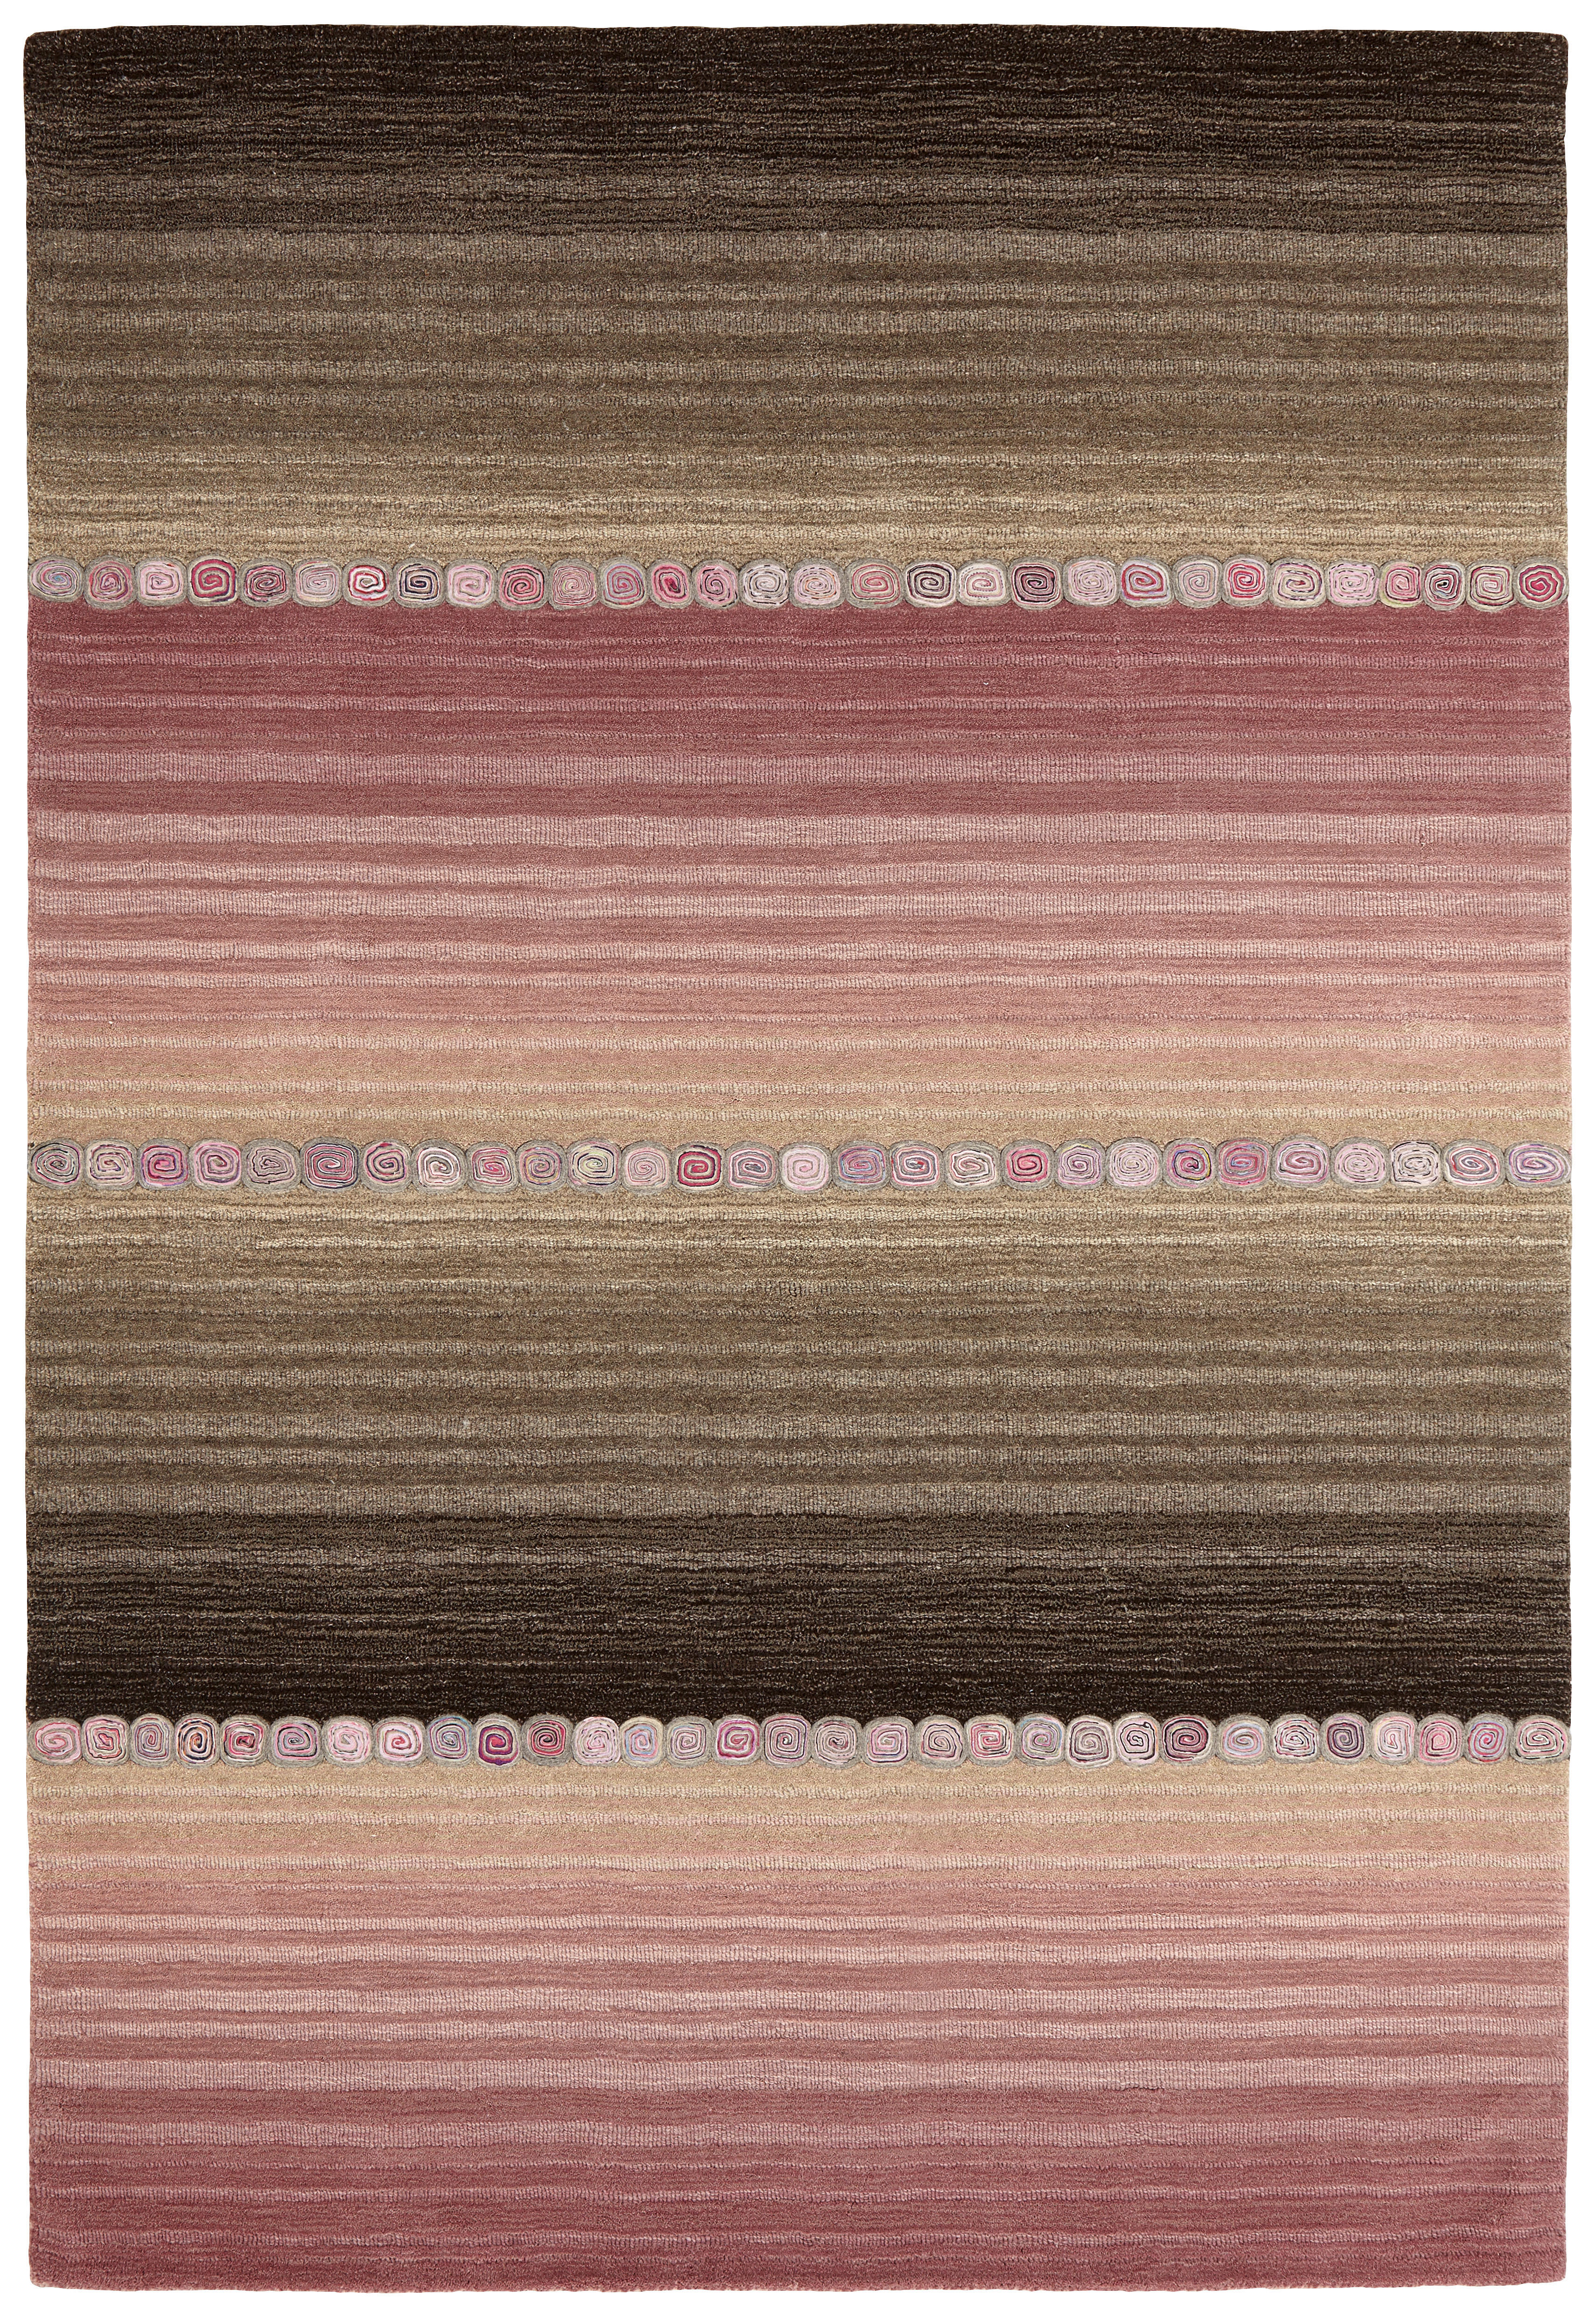 Cazaris ORIENTÁLNÍ KOBEREC, 80/200 cm, šedá, pink - šedá, pink